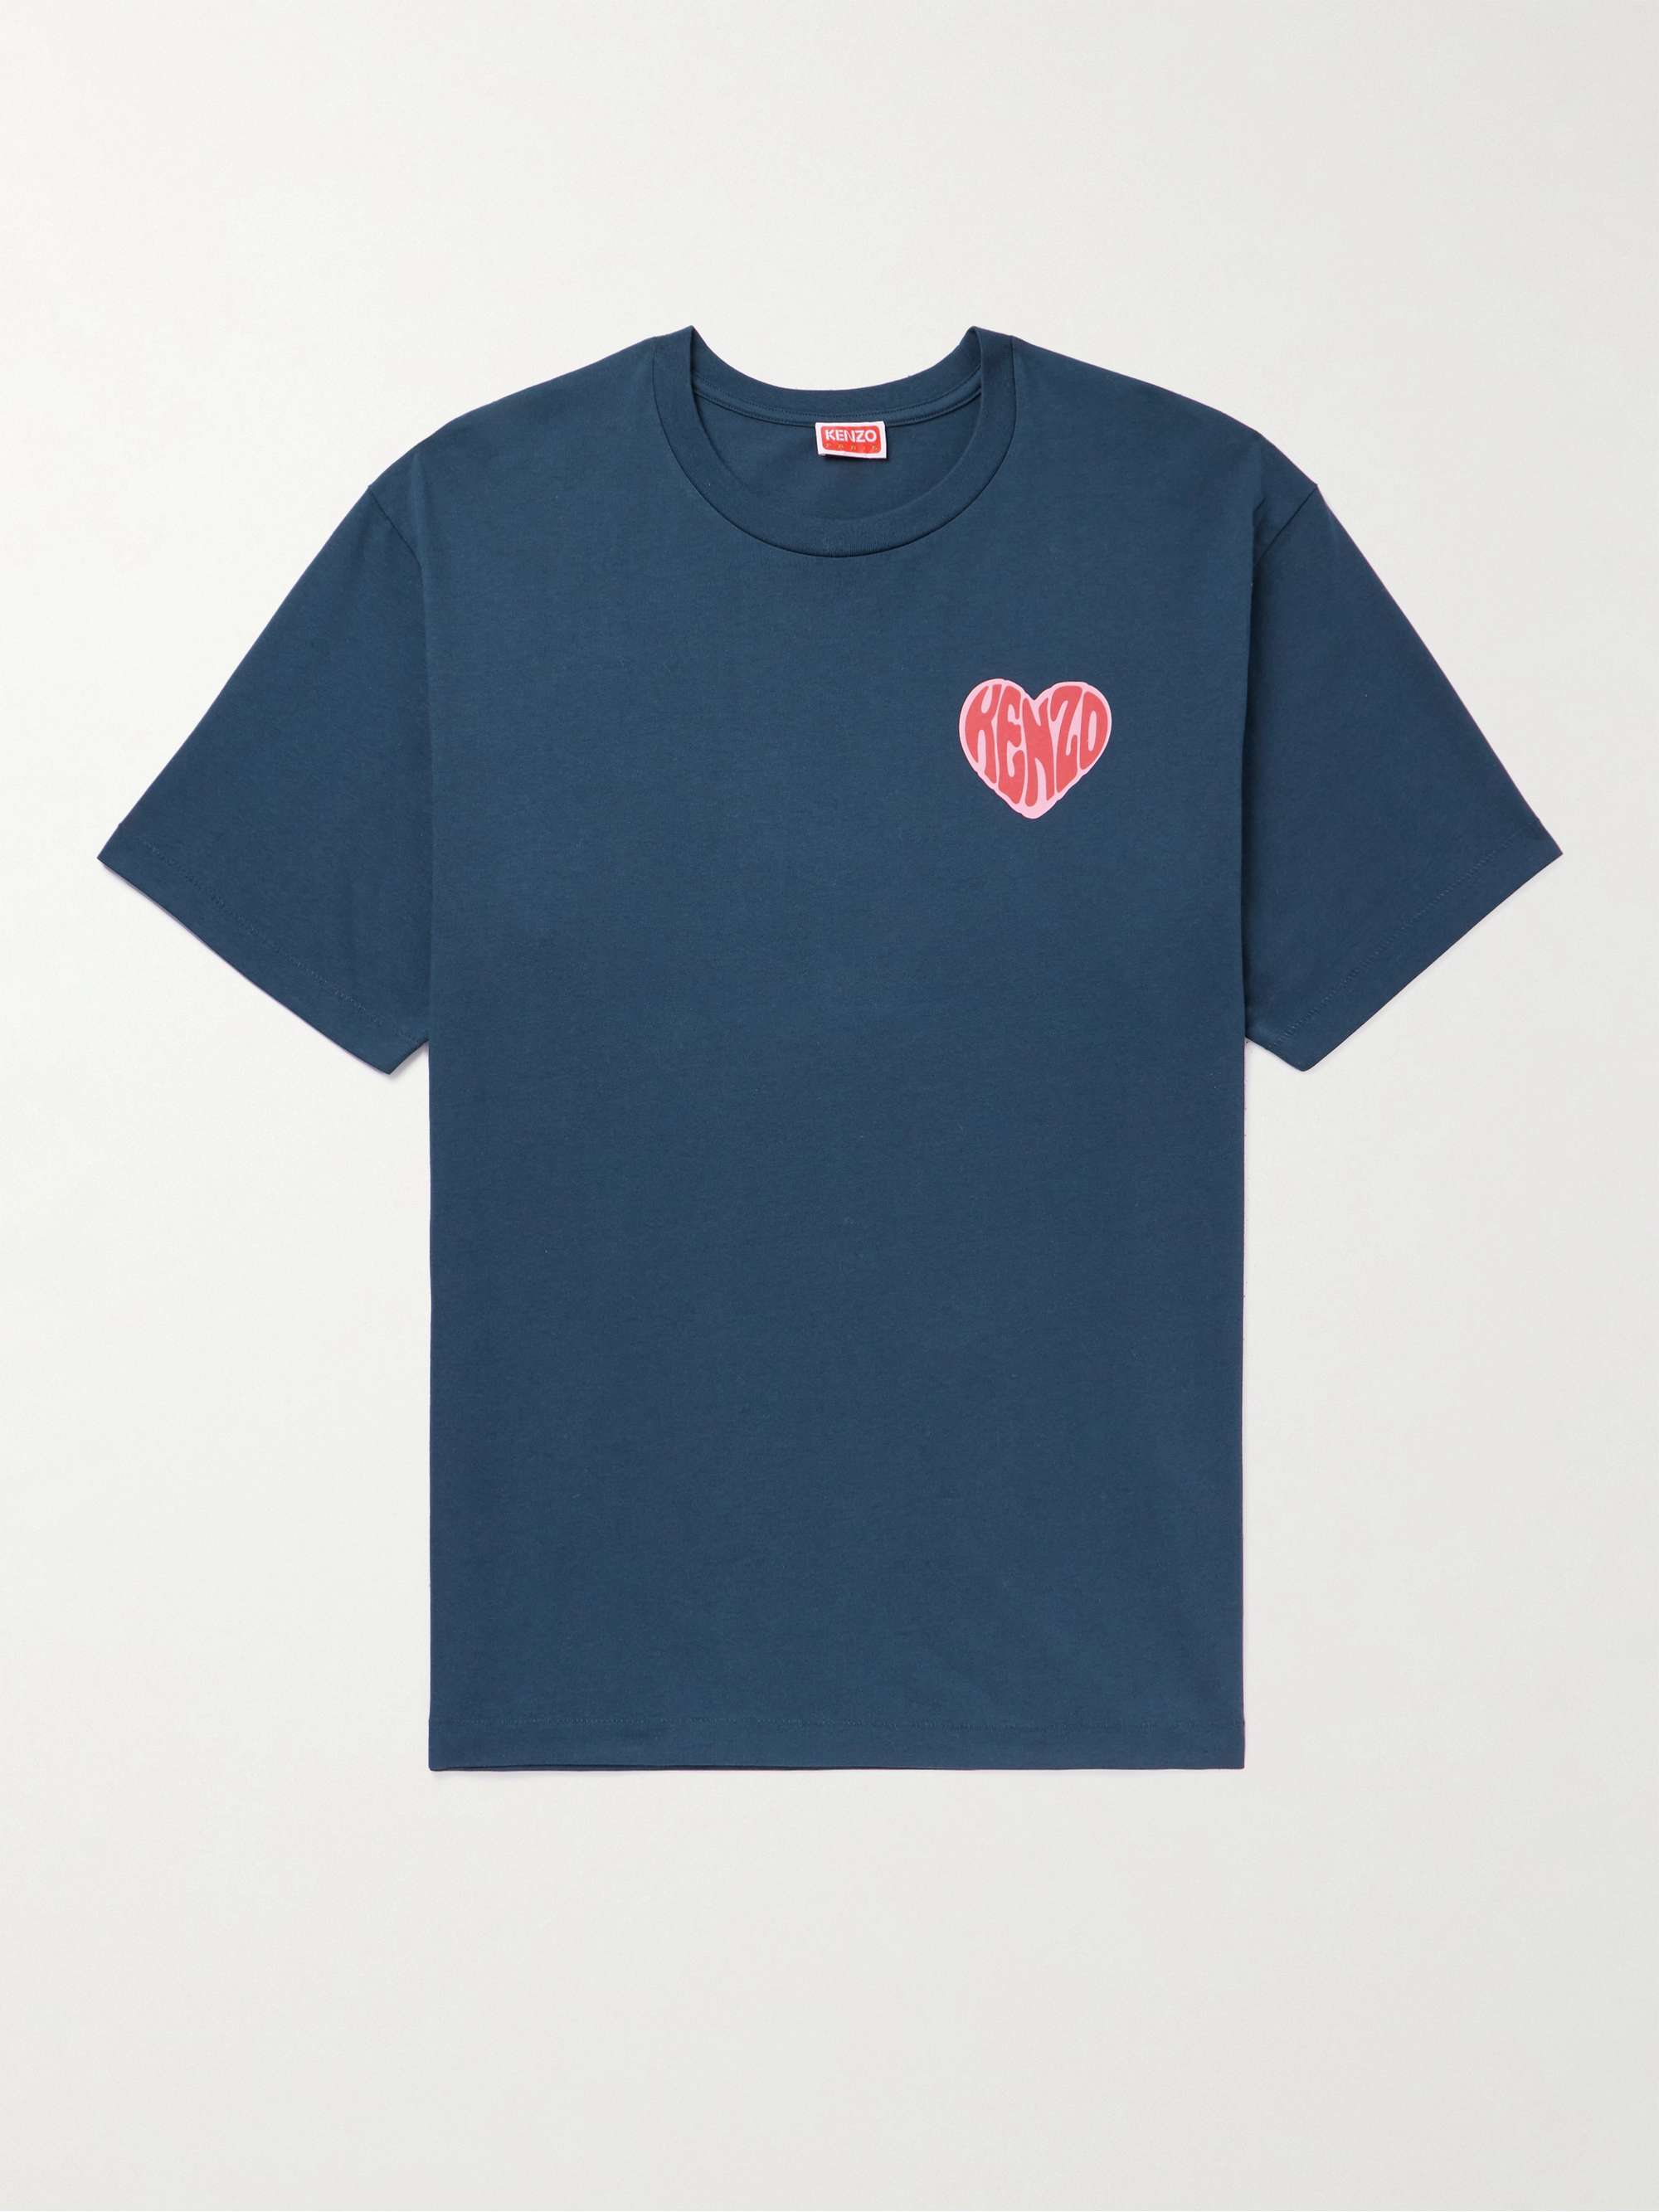 KENZO Oversized Printed Cotton-Jersey T-Shirt for Men | MR PORTER